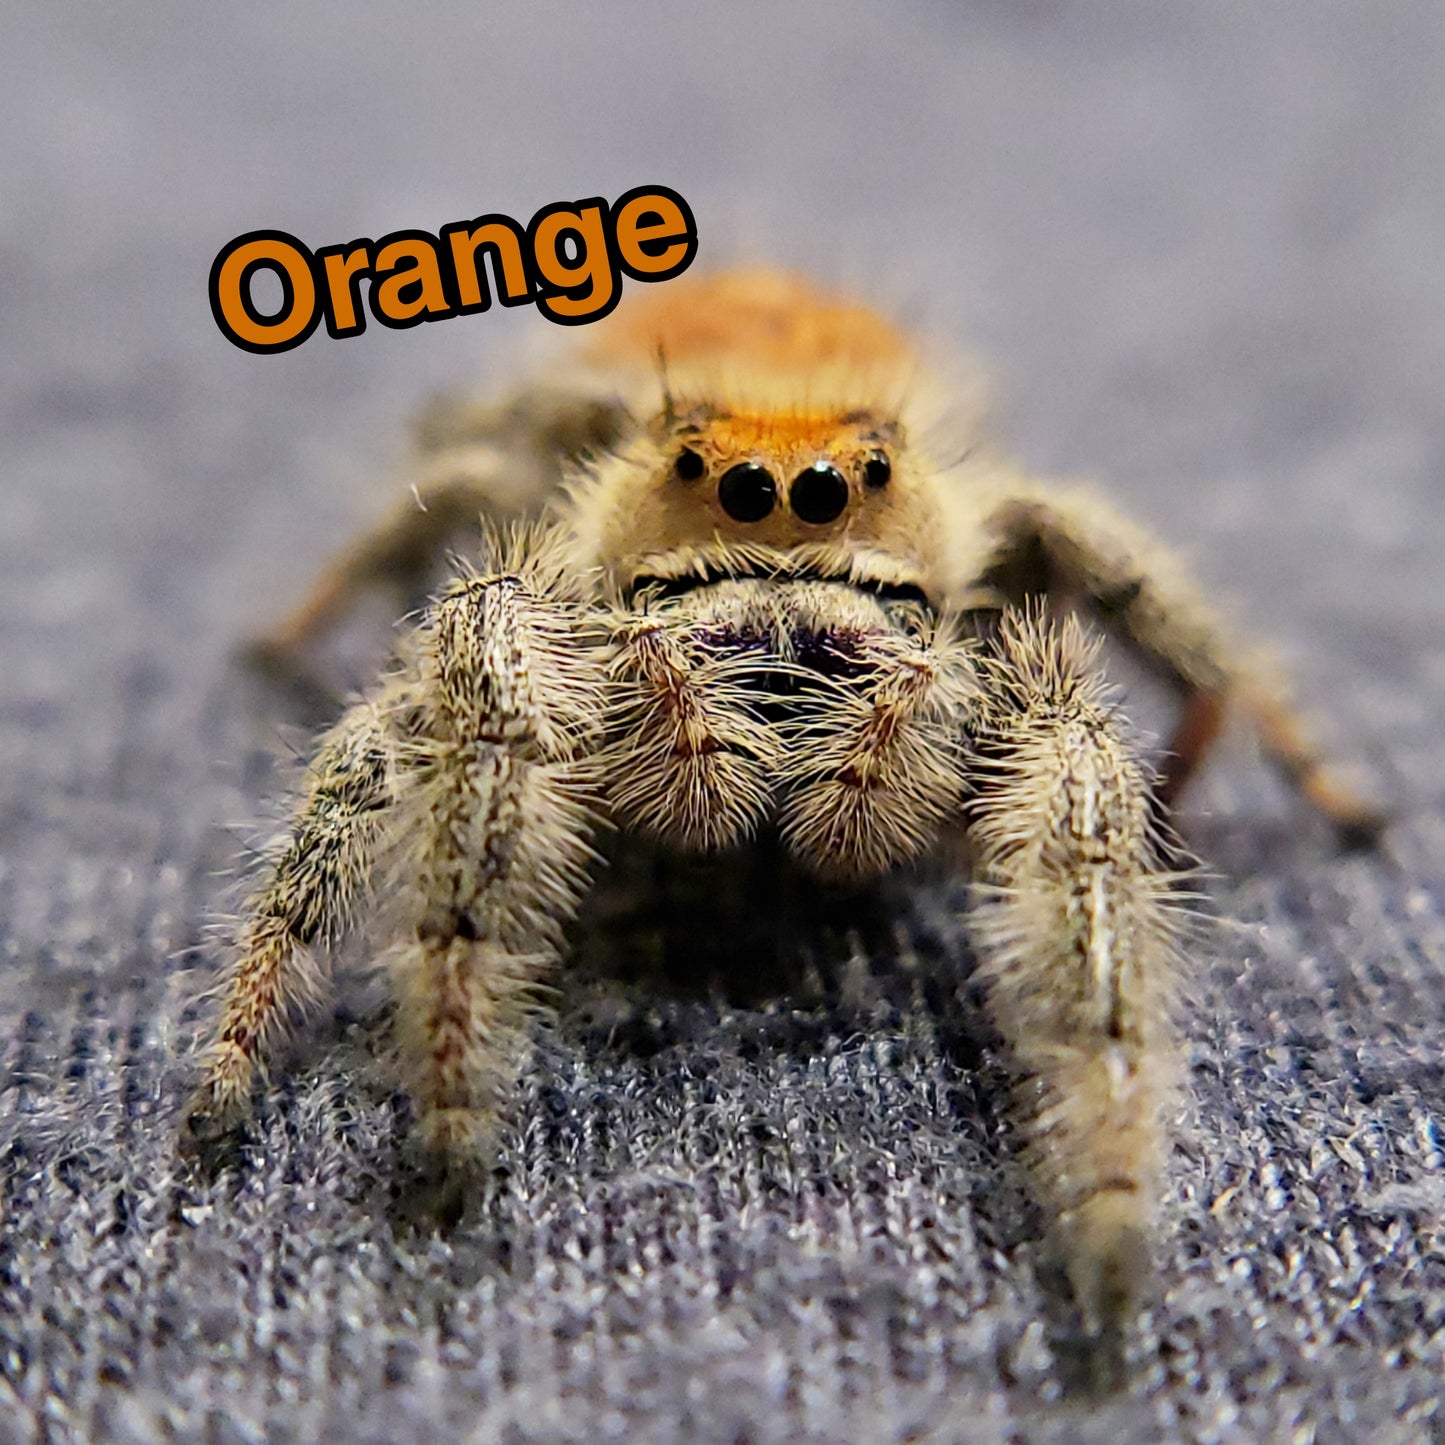 Jumping Spider For Sale, Orange, Salticidae